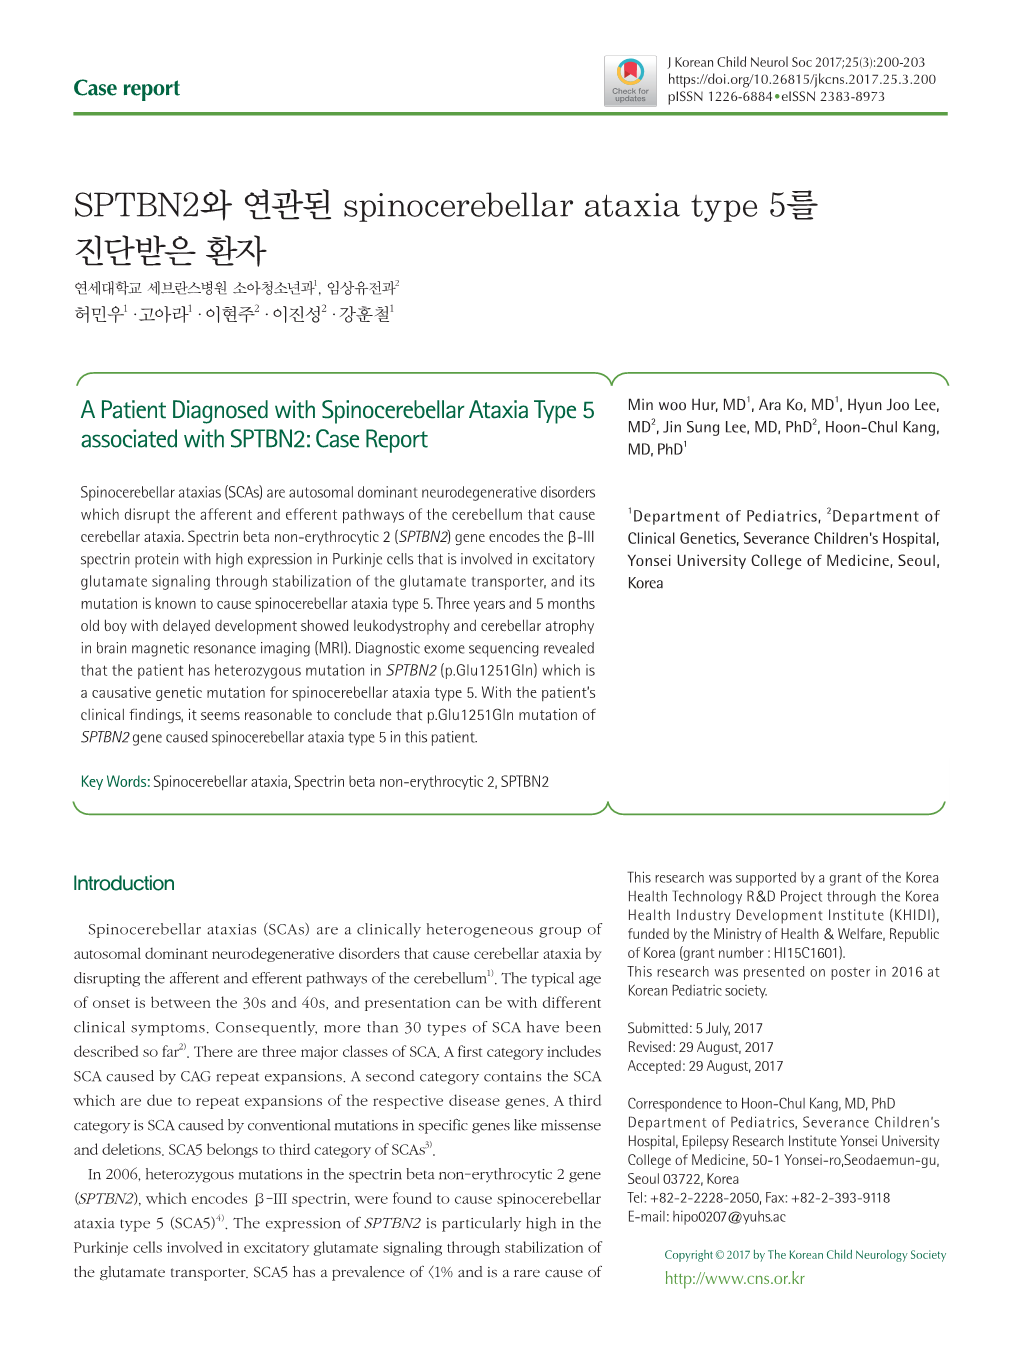 SPTBN2와 연관된 Spinocerebellar Ataxia Type 5를 진단받은 환자 연세대학교 세브란스병원 소아청소년과1, 임상유전과2 허민우1・고 아 라 1・이 현 주 2・이 진 성 2・강 훈 철 1